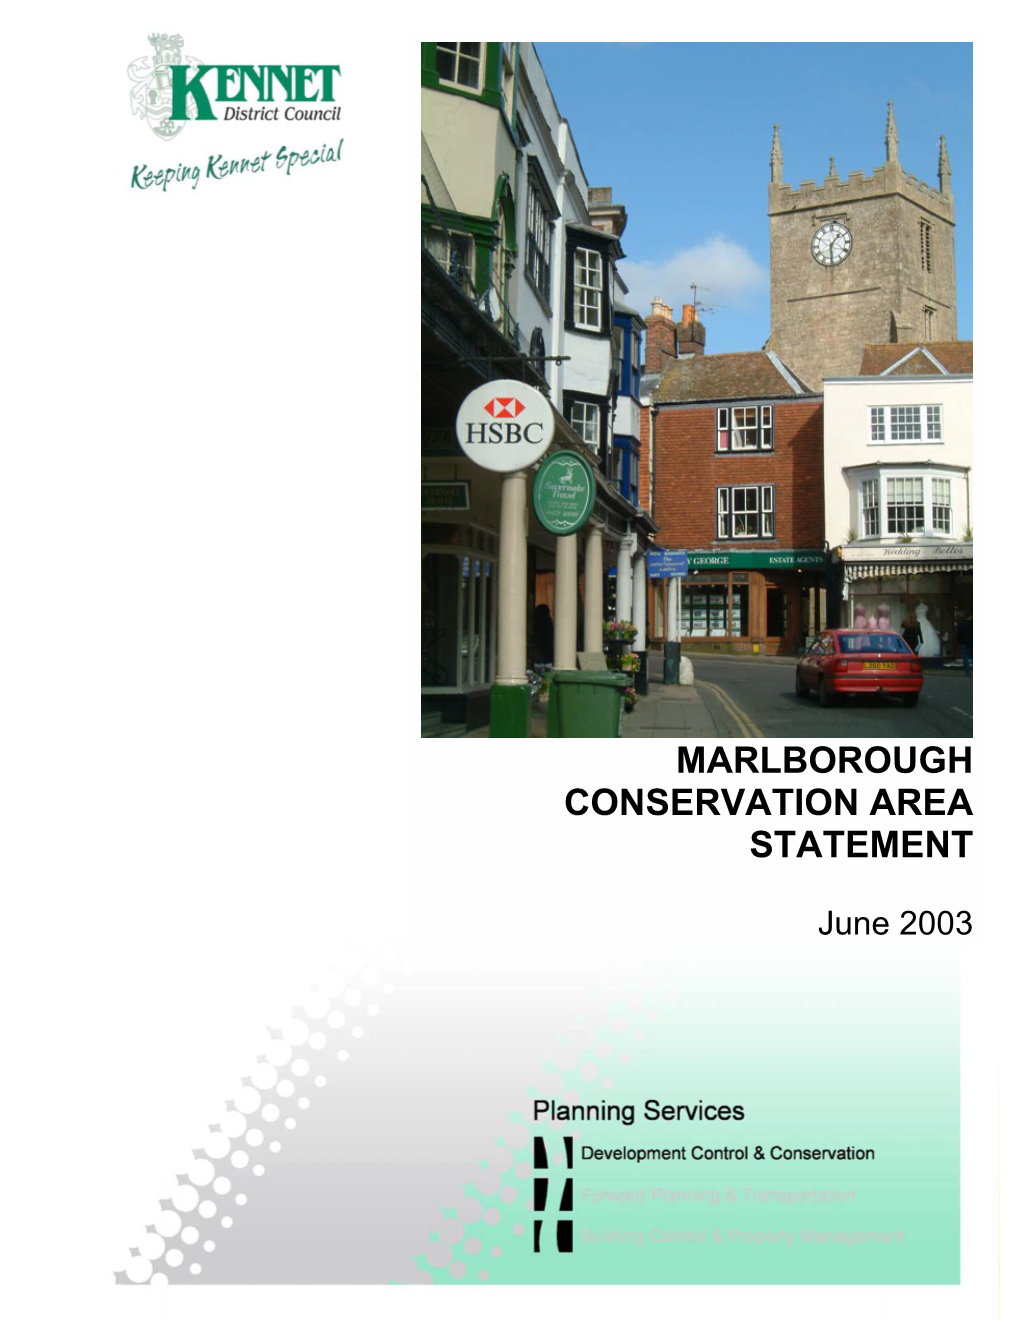 Marlborough Conservation Area Statement, Kennet District Council